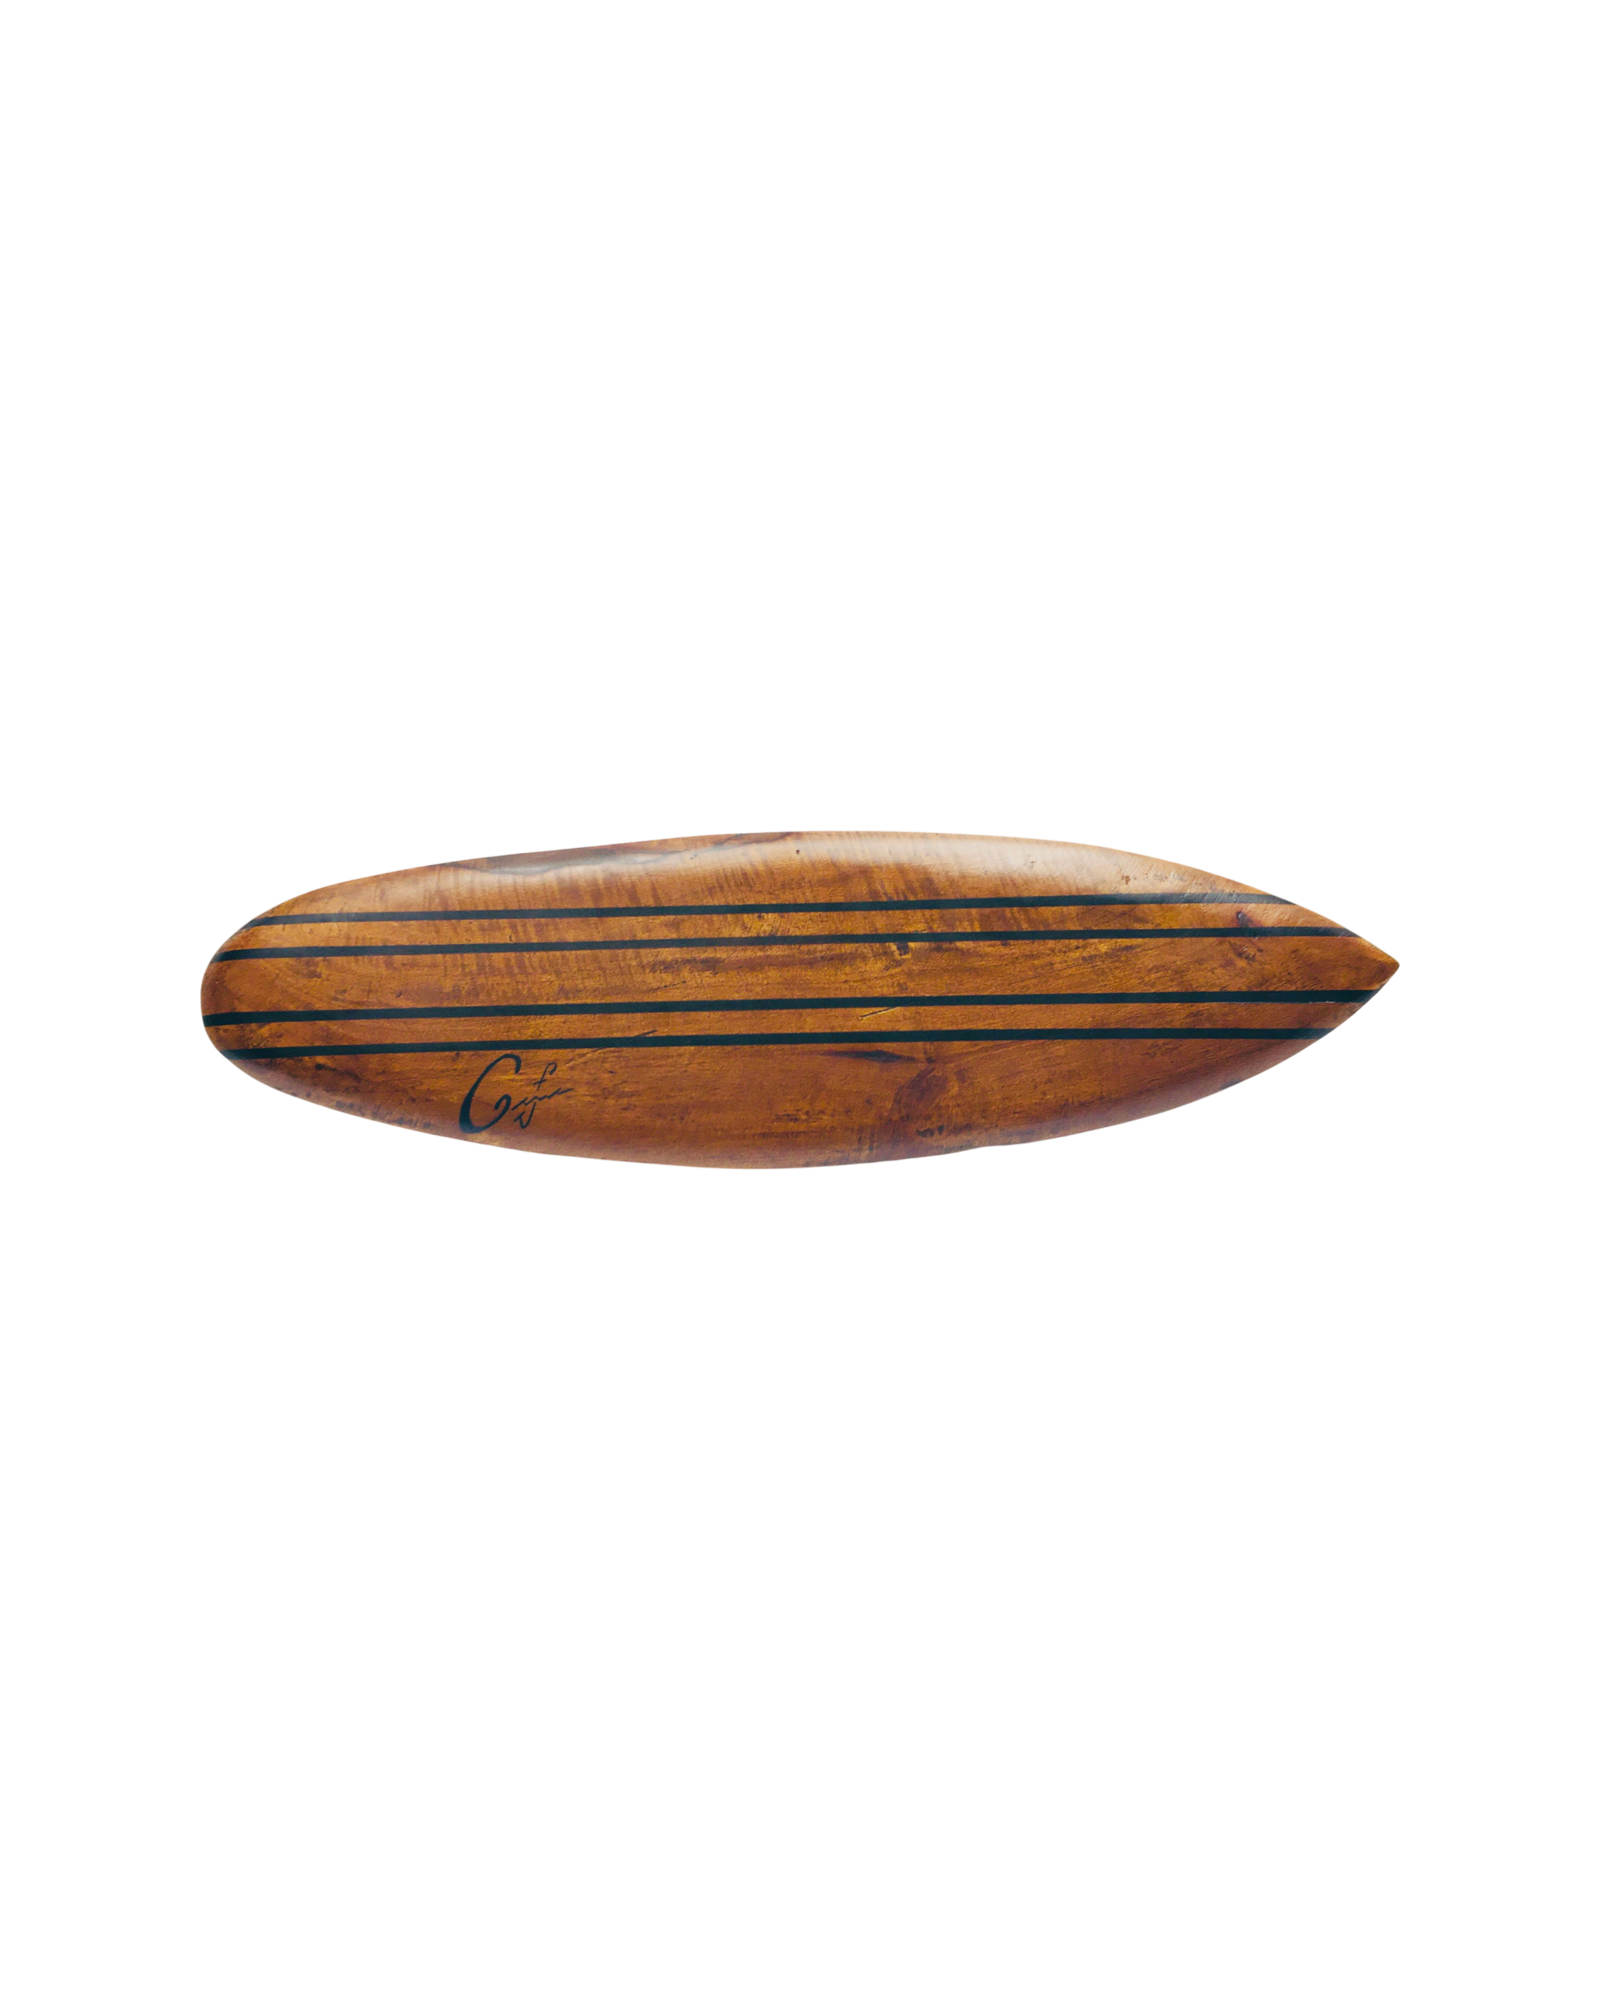 A brown wooden mahogany surfboard. 